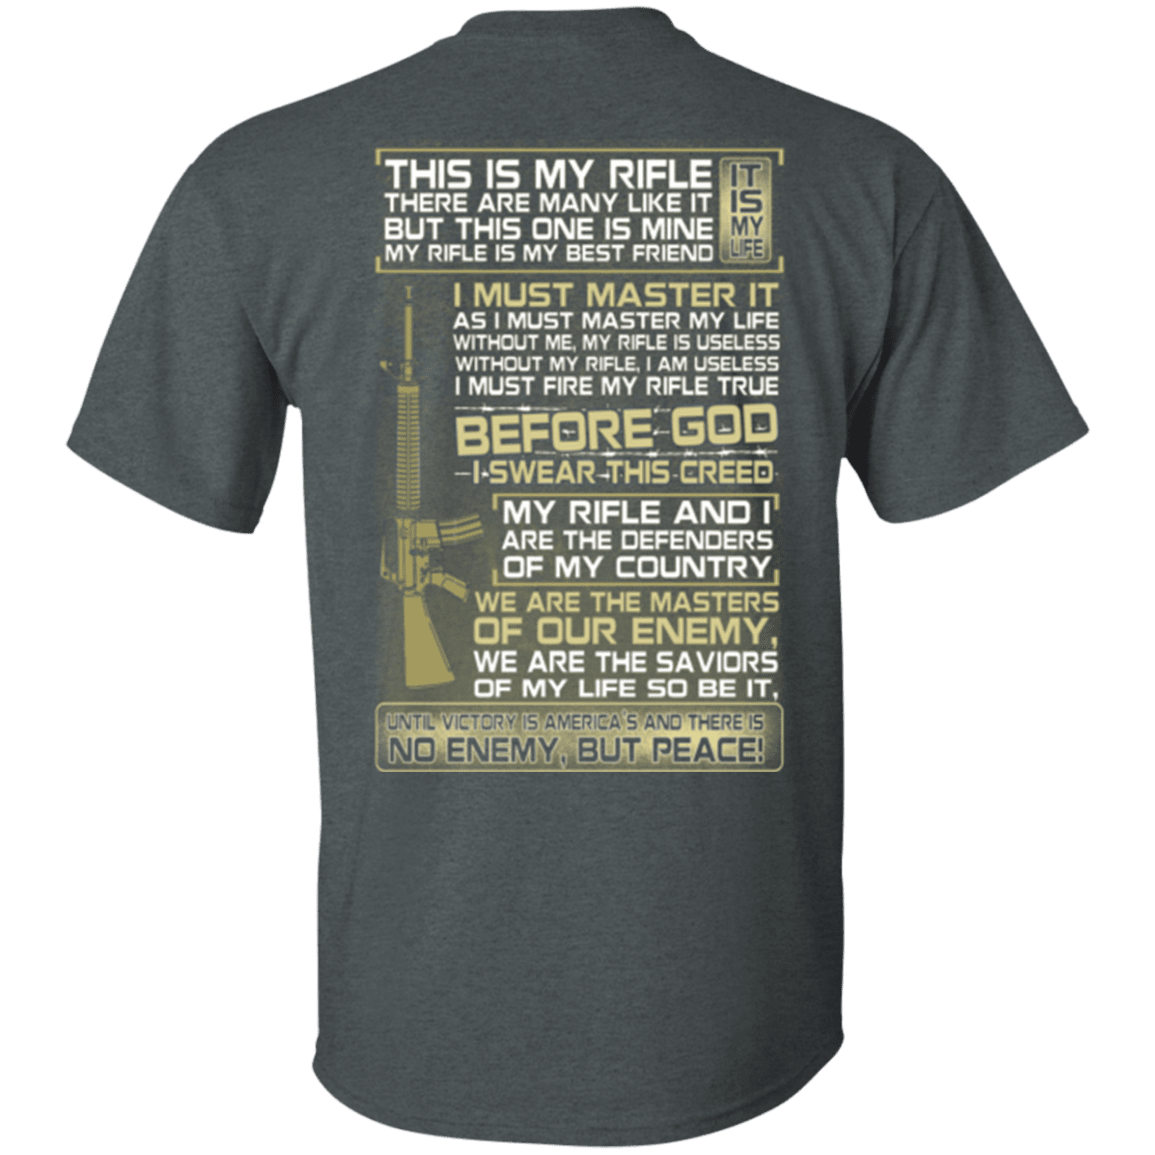 Military T-Shirt "Veteran - This is My Rifle I Must Master It"-TShirt-General-Veterans Nation